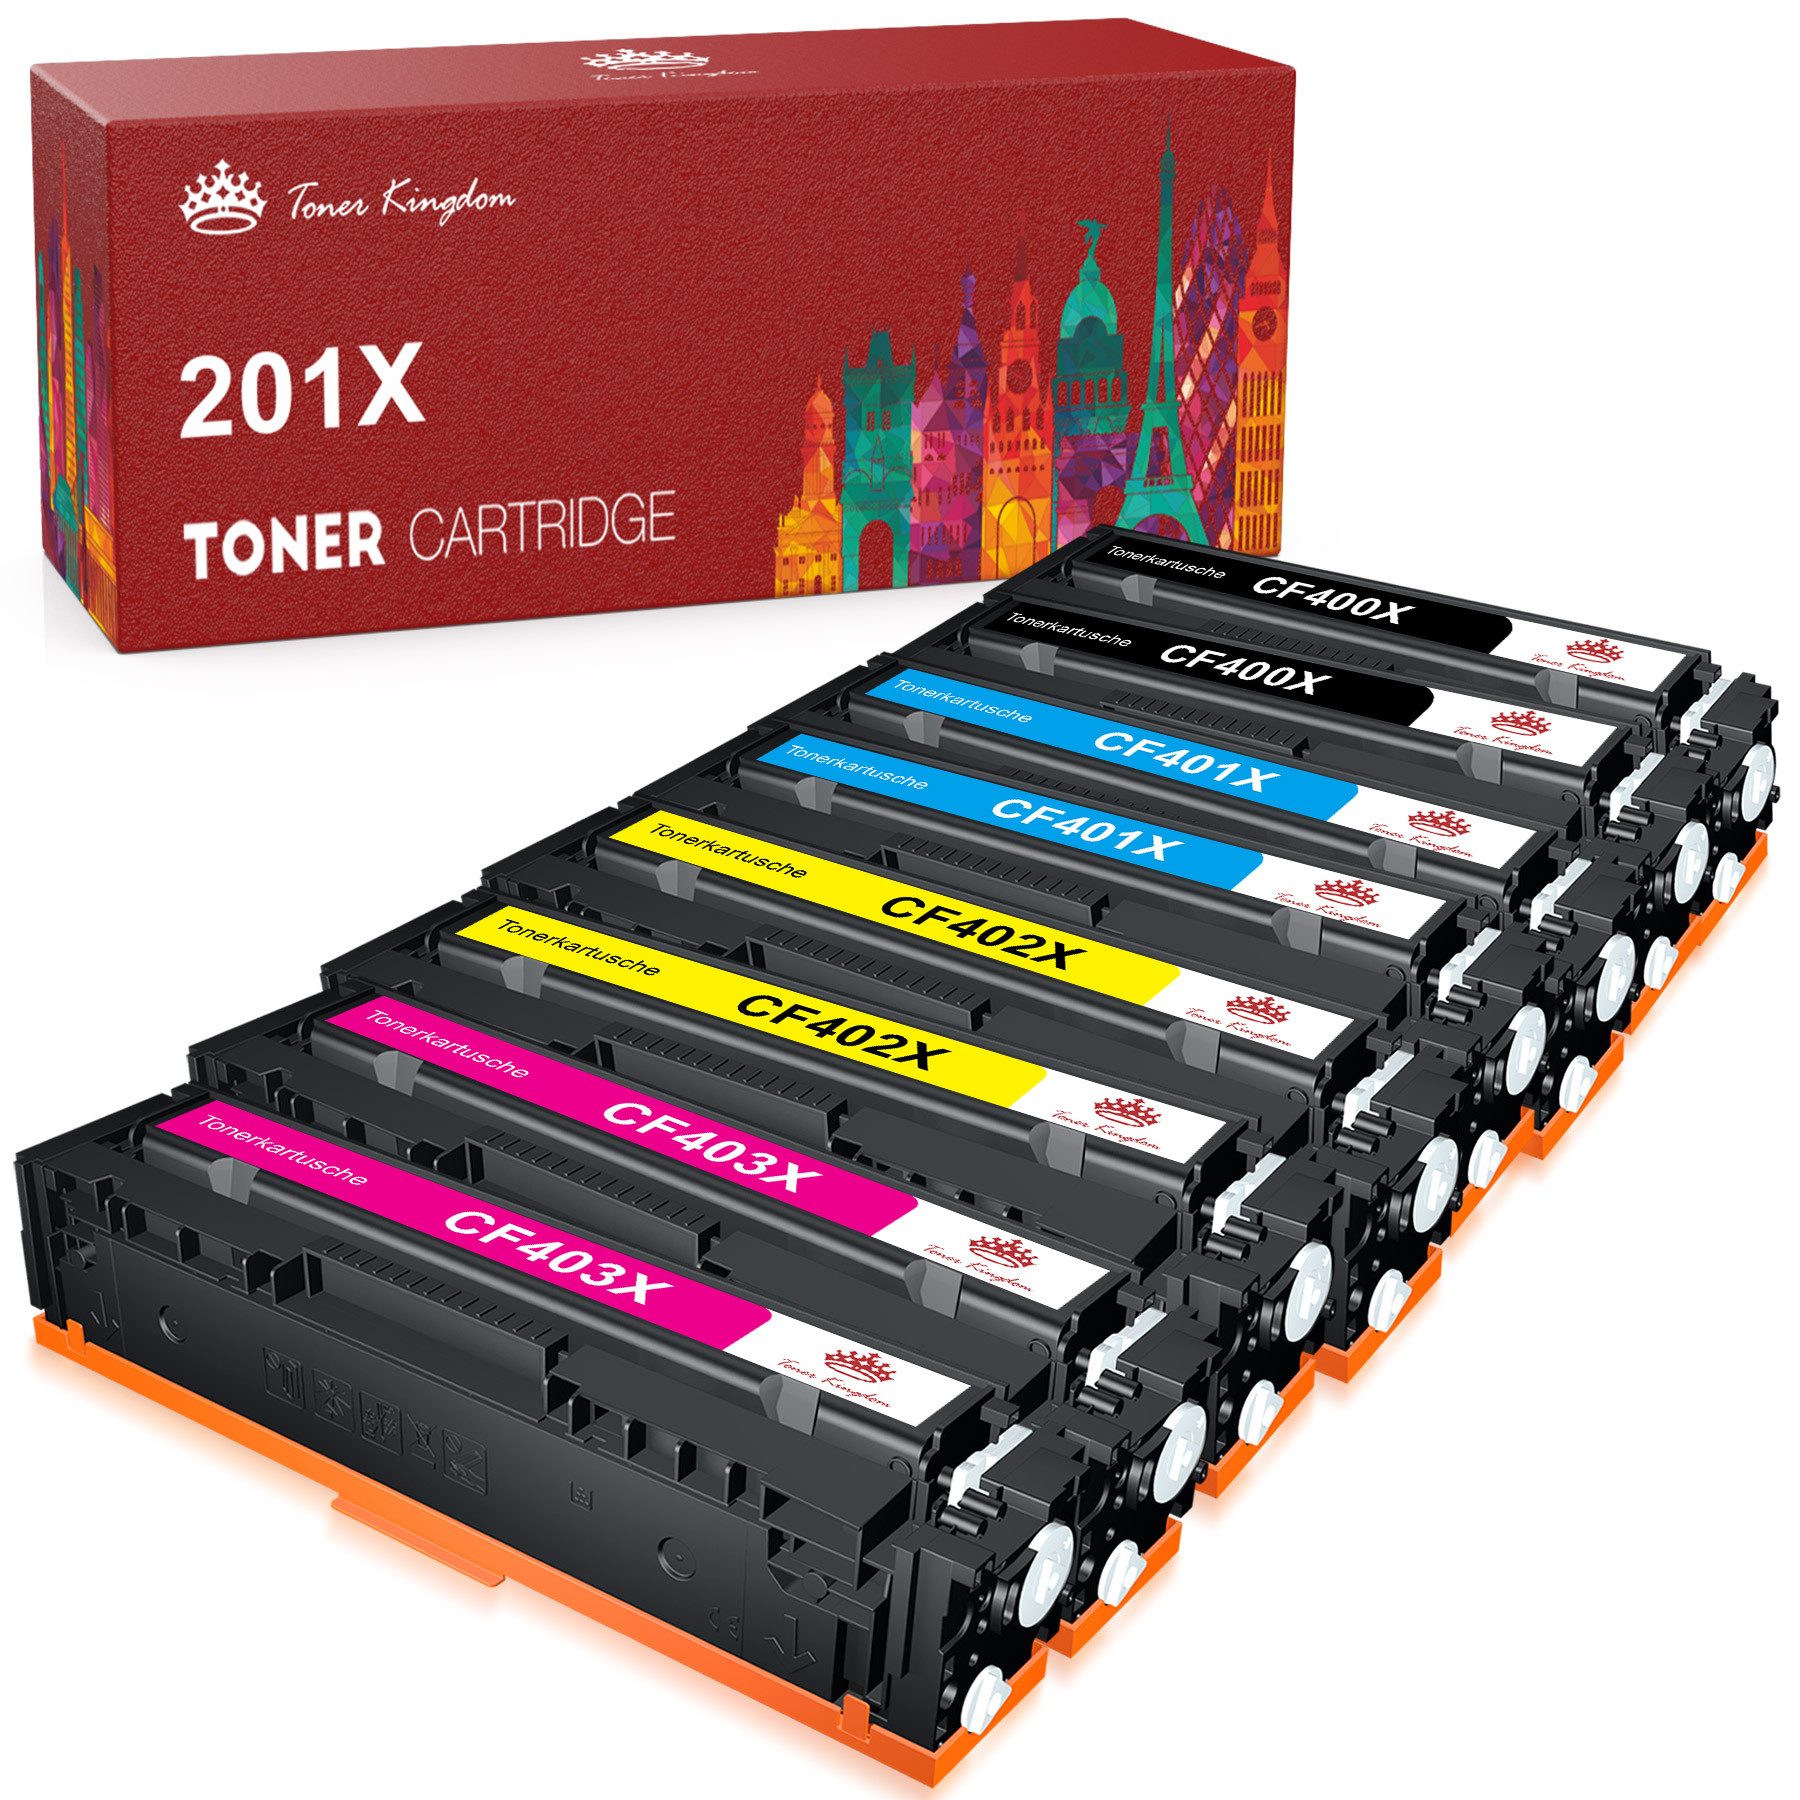 Toner Kingdom Tonerpatrone 8er für HP CF400X 201X, (Color LaserJet Pro MFP M277dw M277dw MFP M277n M274n M250 M270), Color LaserJet Pro M252dw M252n Drucker